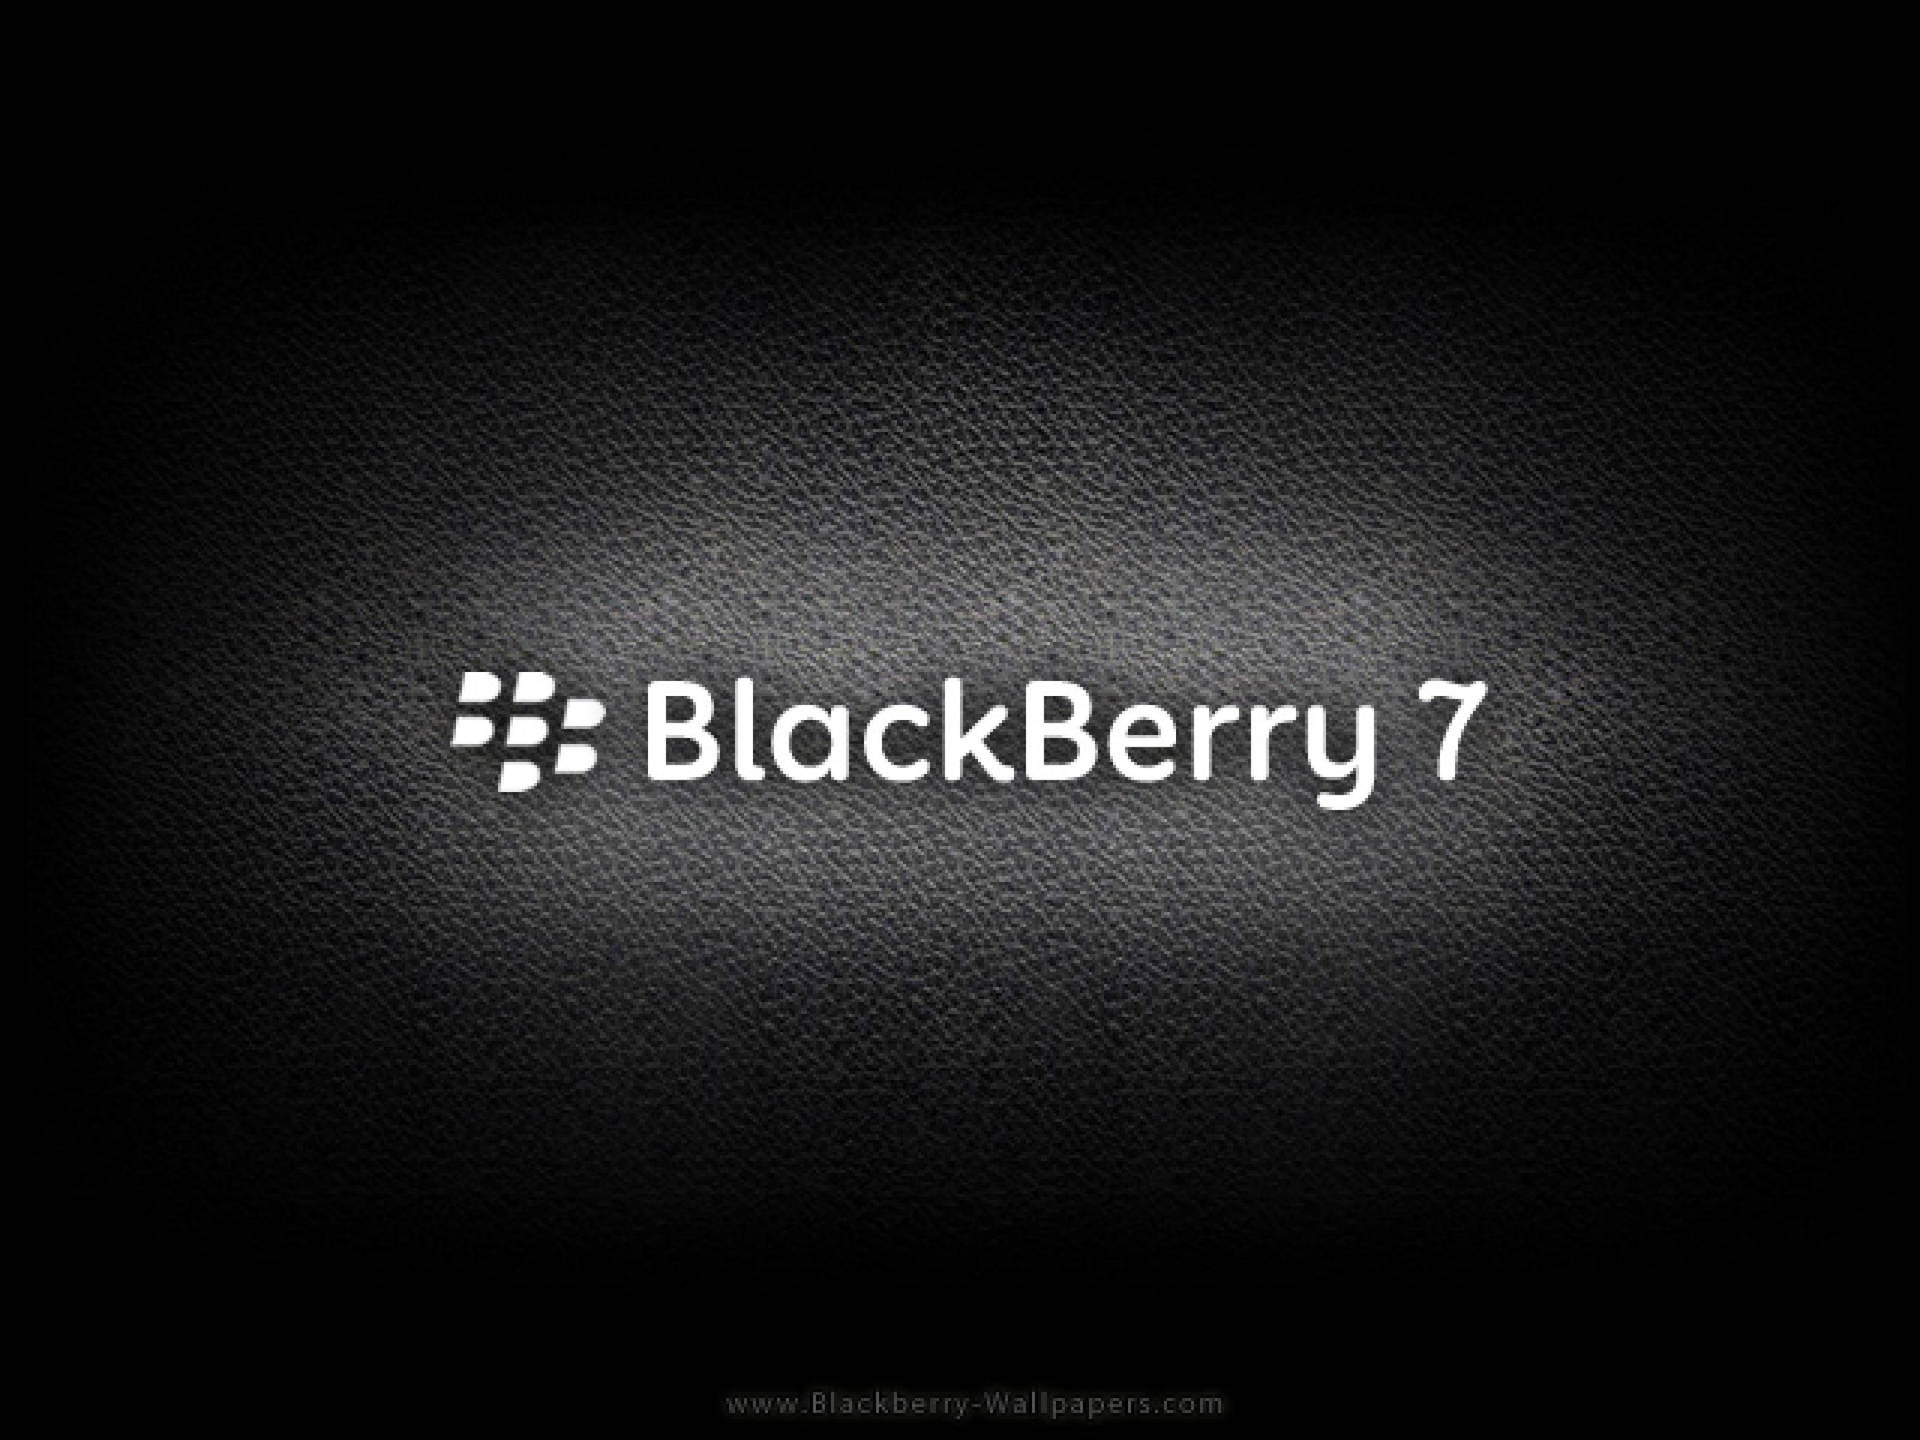 Free Blackberry Wallpaper Downloads, [100+] Blackberry Wallpapers for FREE  